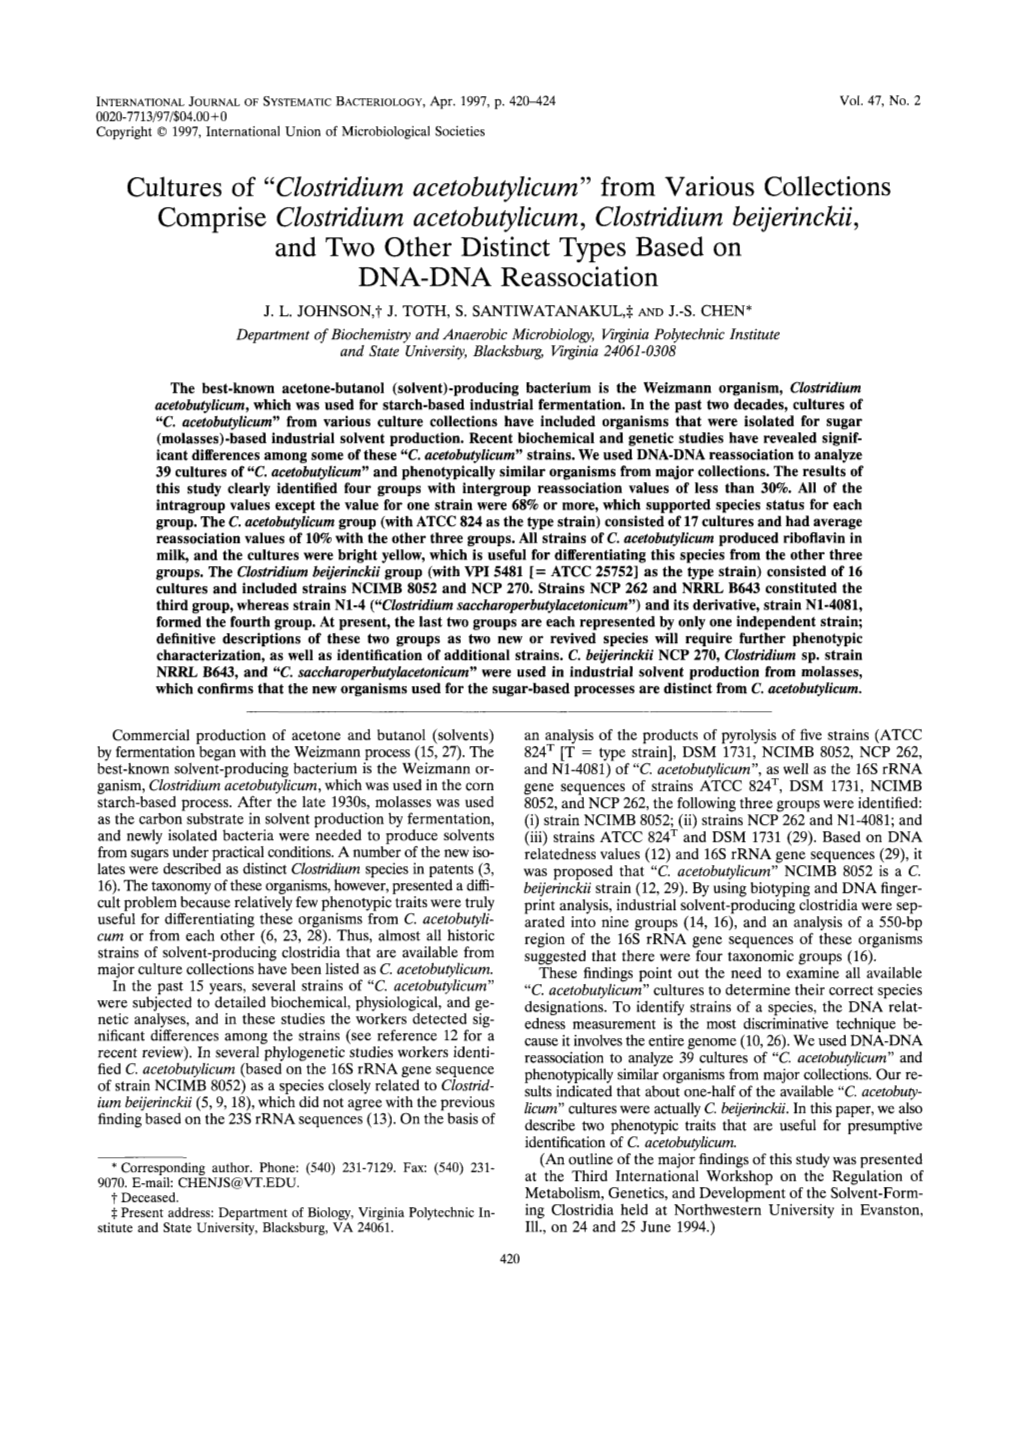 Clostridium Acetobutylicum, Clostridium Beijerinckii, and Two Other Distinct Types Based on DNA-DNA Reassociation